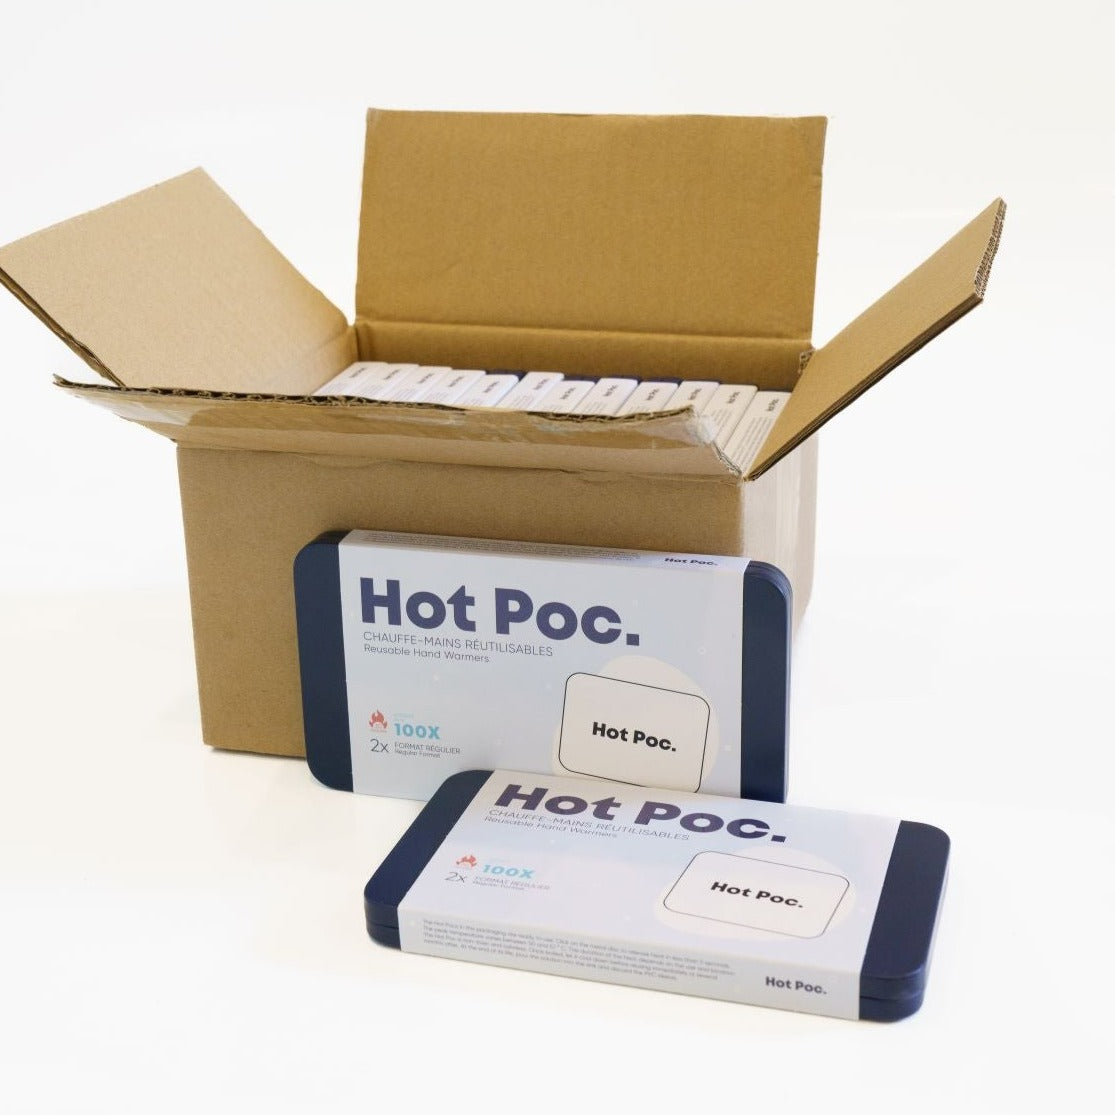 Box of 2 Hot Poc (2 regular) - Case of 12 boxes